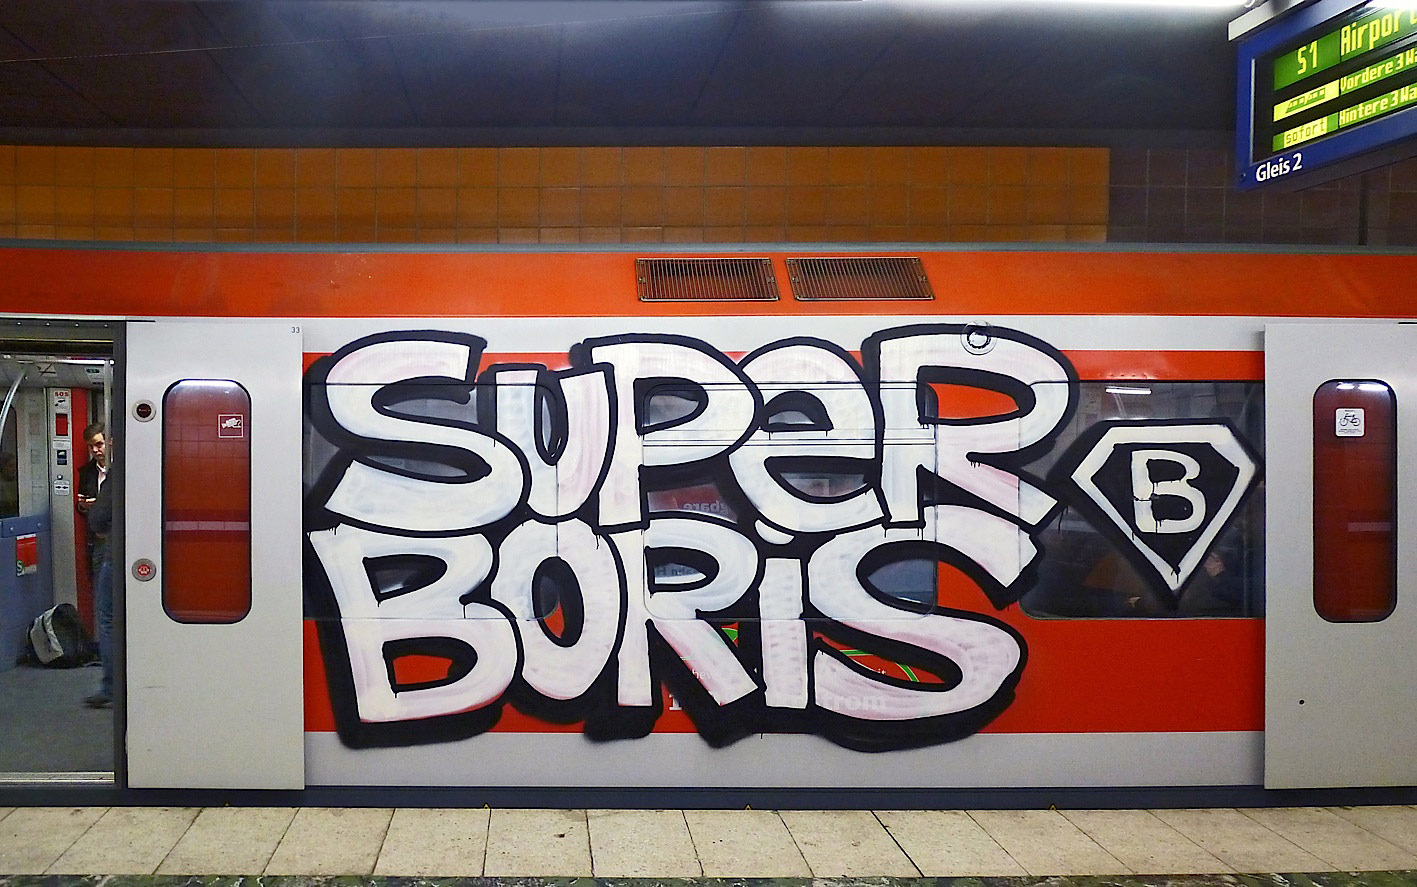  -boris- subway hamburg germany